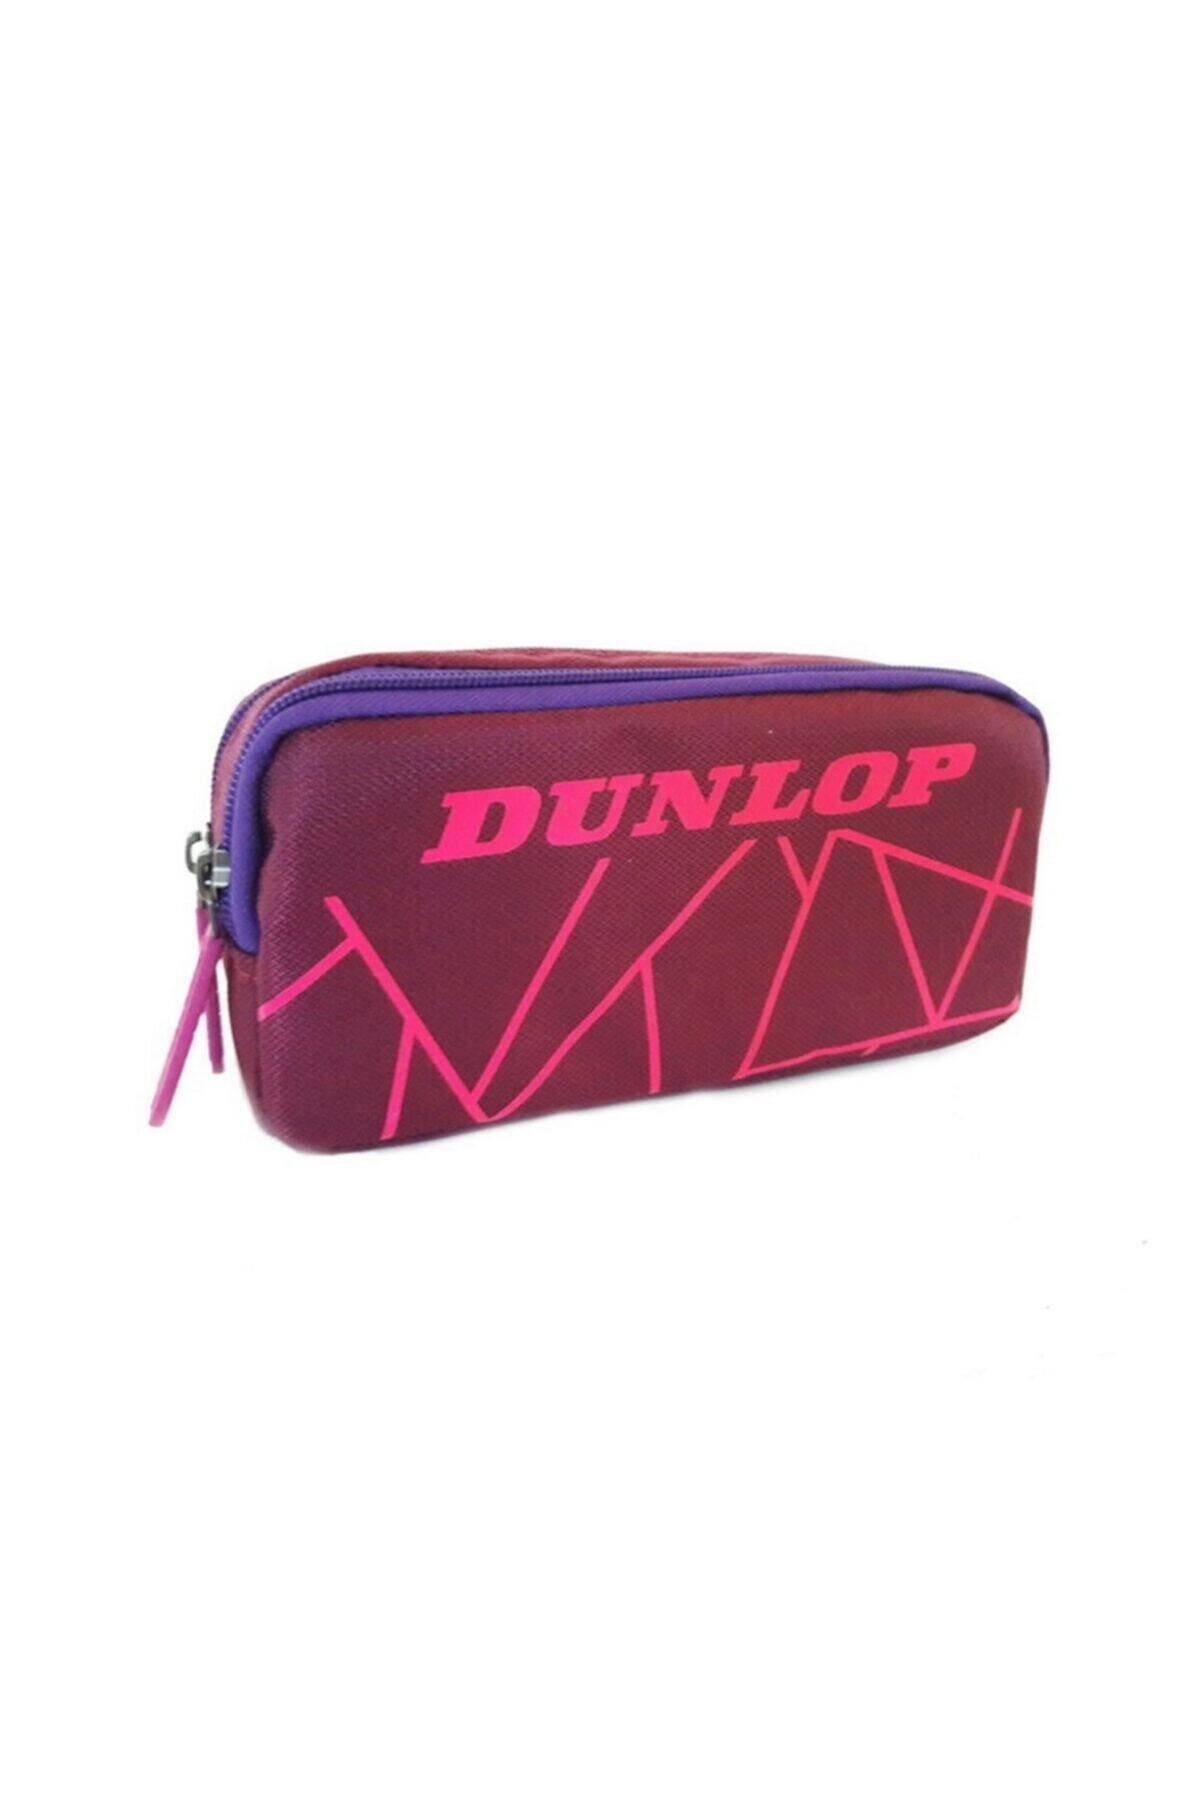 Dunlop Kalem Kutusu 21x10x6 Cm (Dpklk20525)